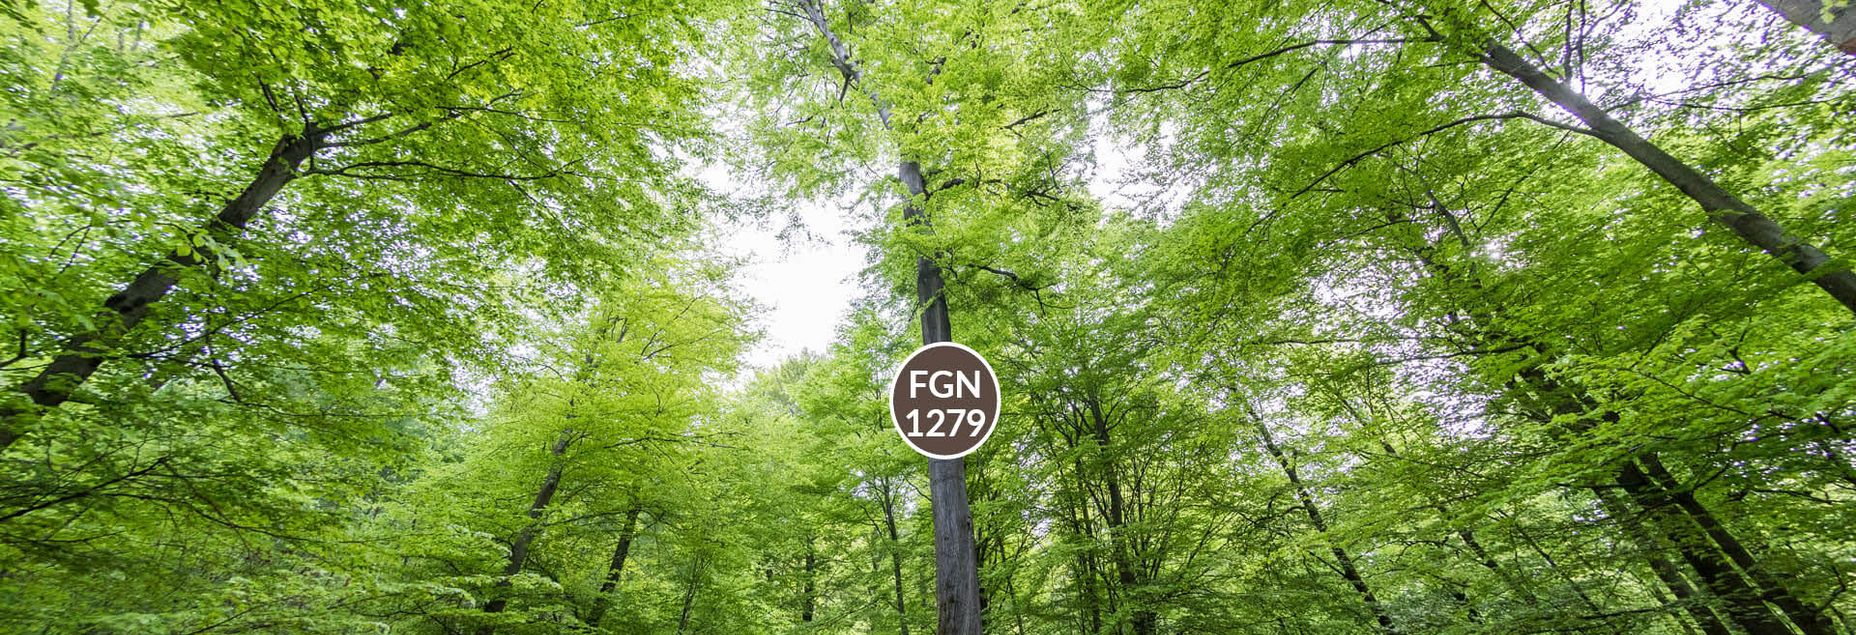 Baum FGN 1279 - Fisheyeperspektive